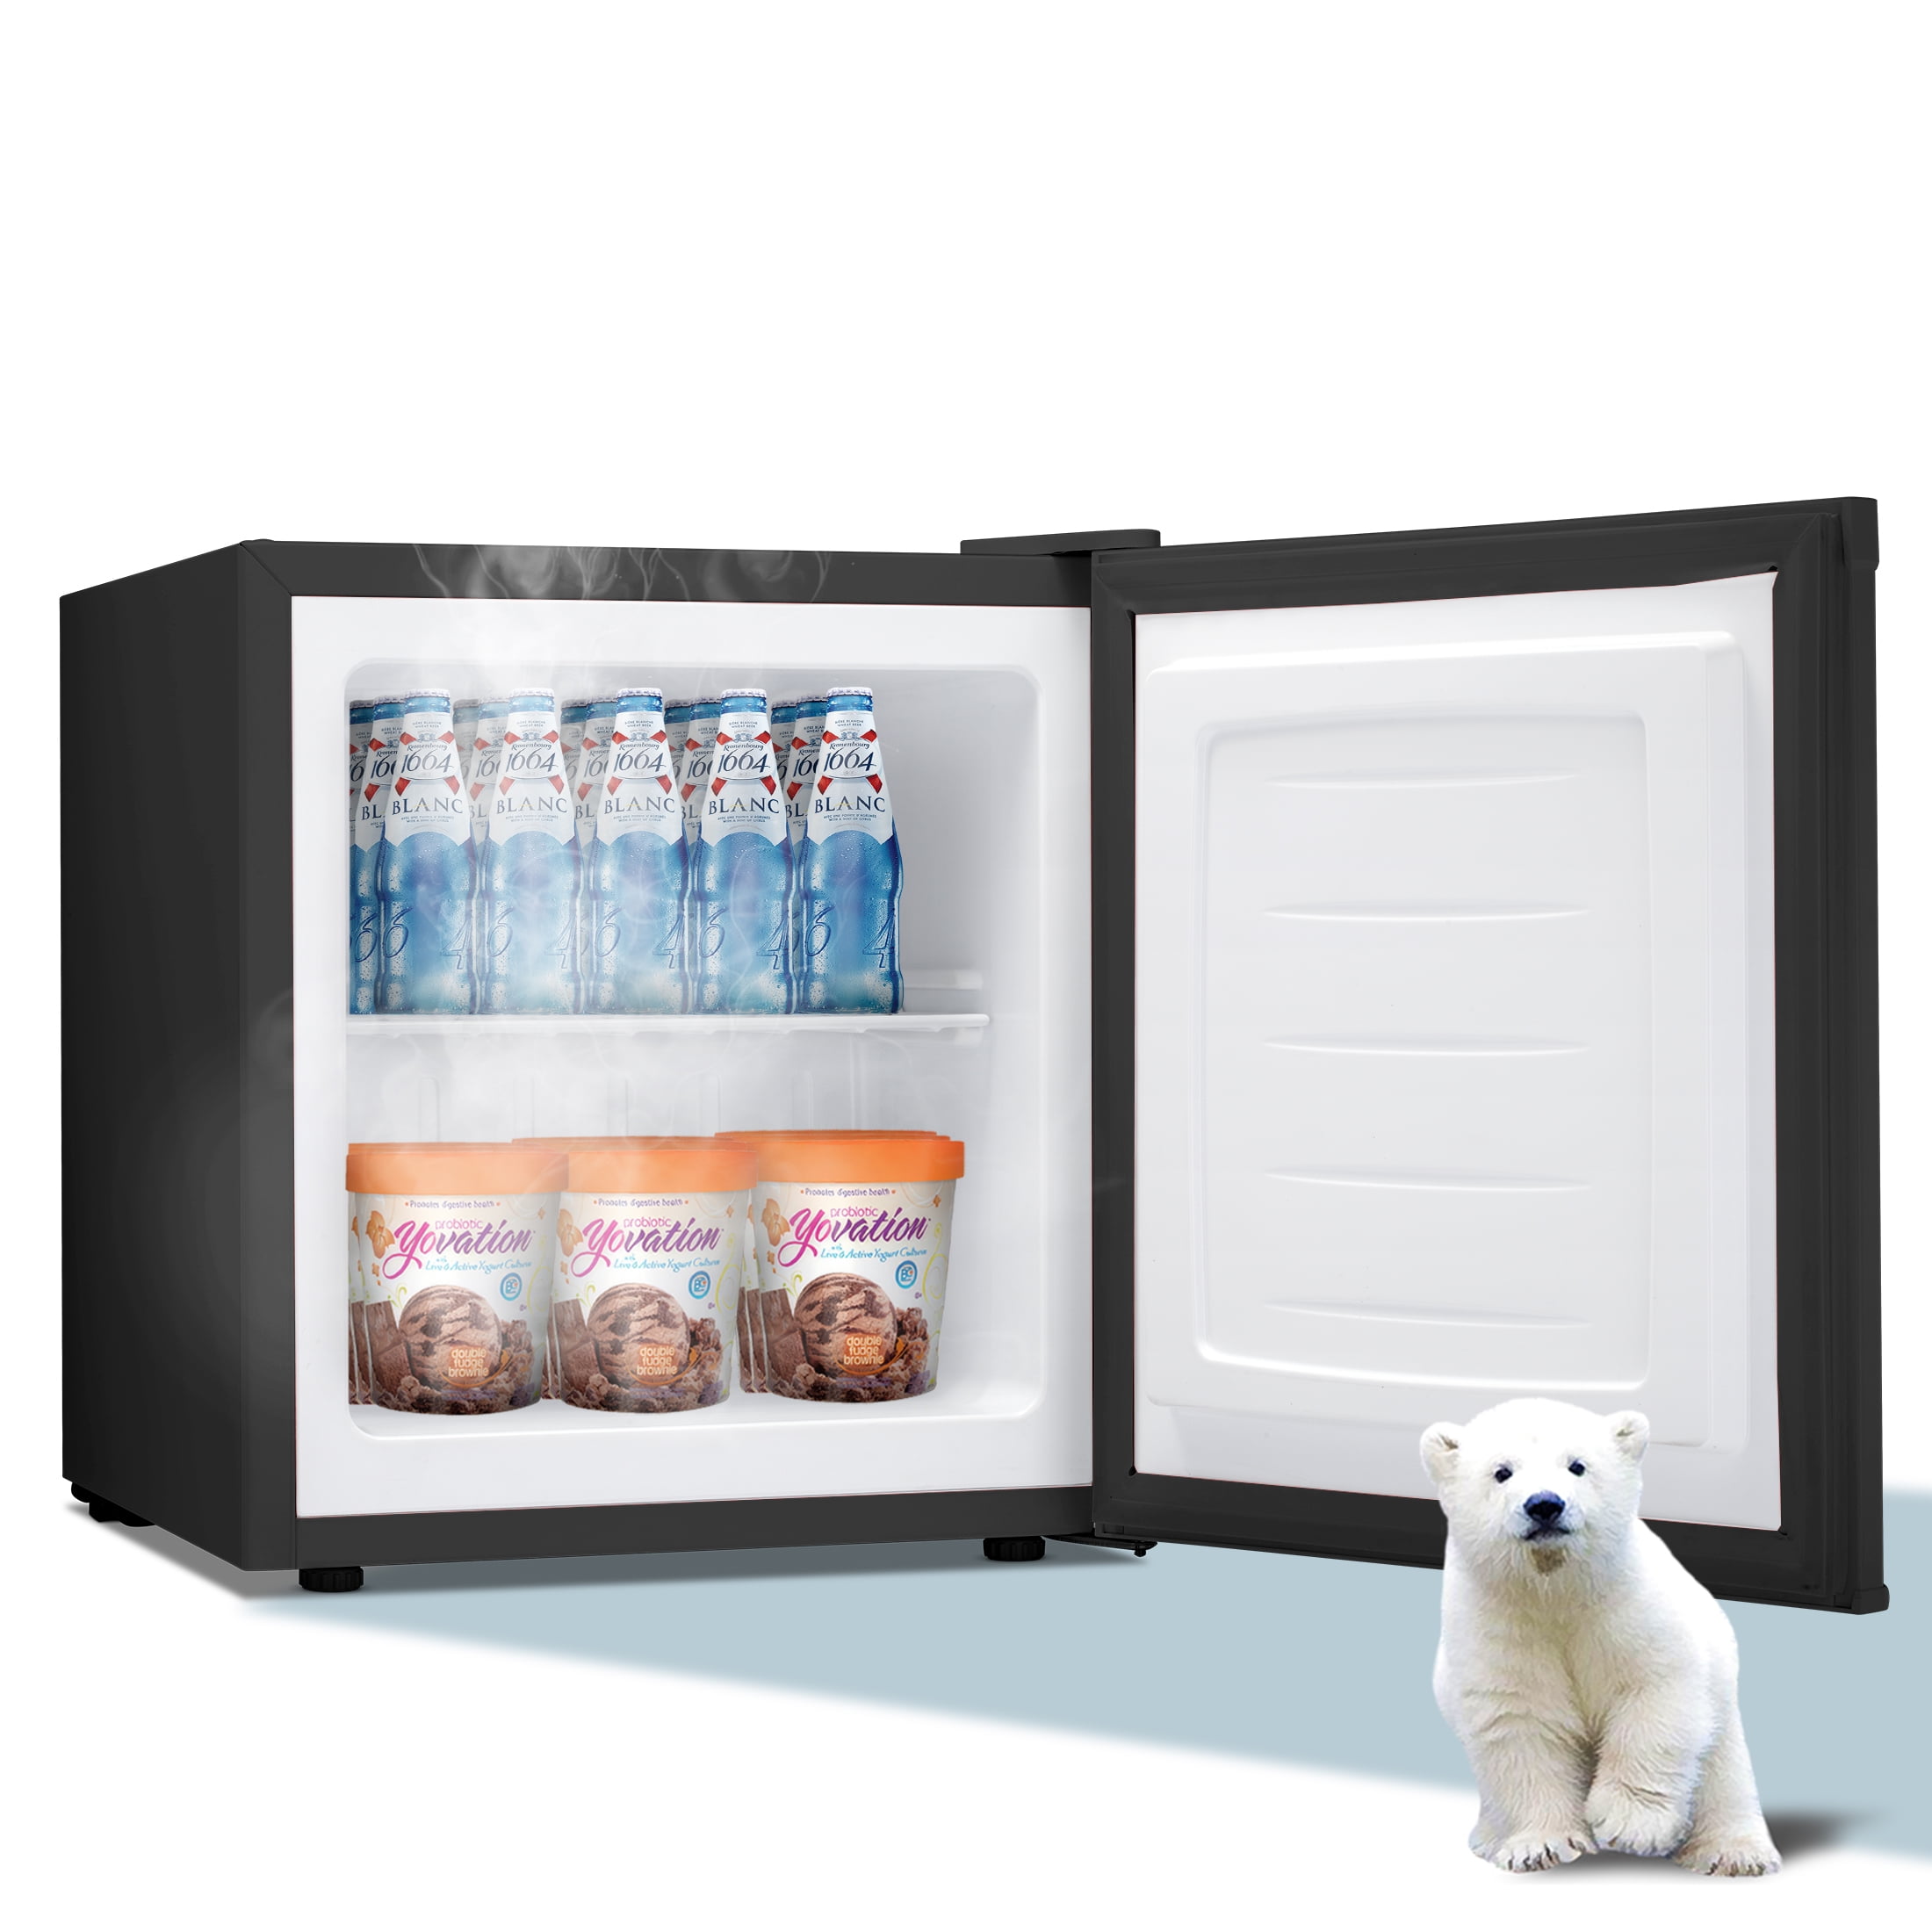 Havato 3.2 Cu.Ft Mini Fridge with Freezer, Double Door Compact Refrigerator, Retro Mini Refrigerator for Dorm, Office, Bar, RV, Bedroom(Green)